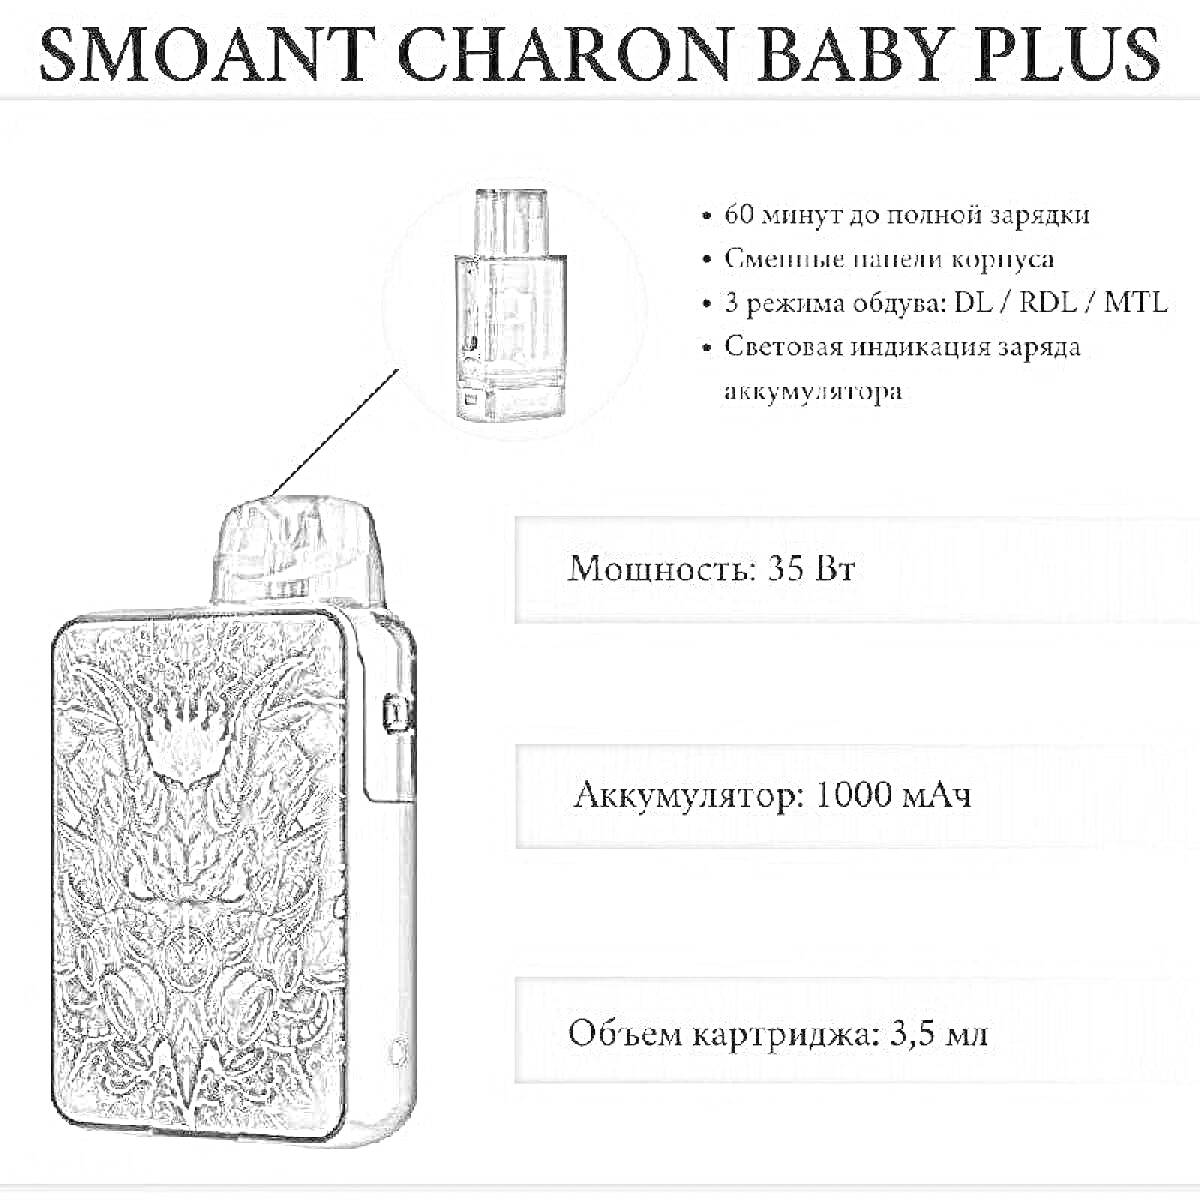 Smoant Charon Baby Plus, изображение устройства с мощностью 35 Вт, аккумулятор 1000 мАч, объем картриджа 3.5 мл, три режима обдува (DL/RDL/MTL), смесьная заправка картриджа, световая индикация заряда аккумулятора